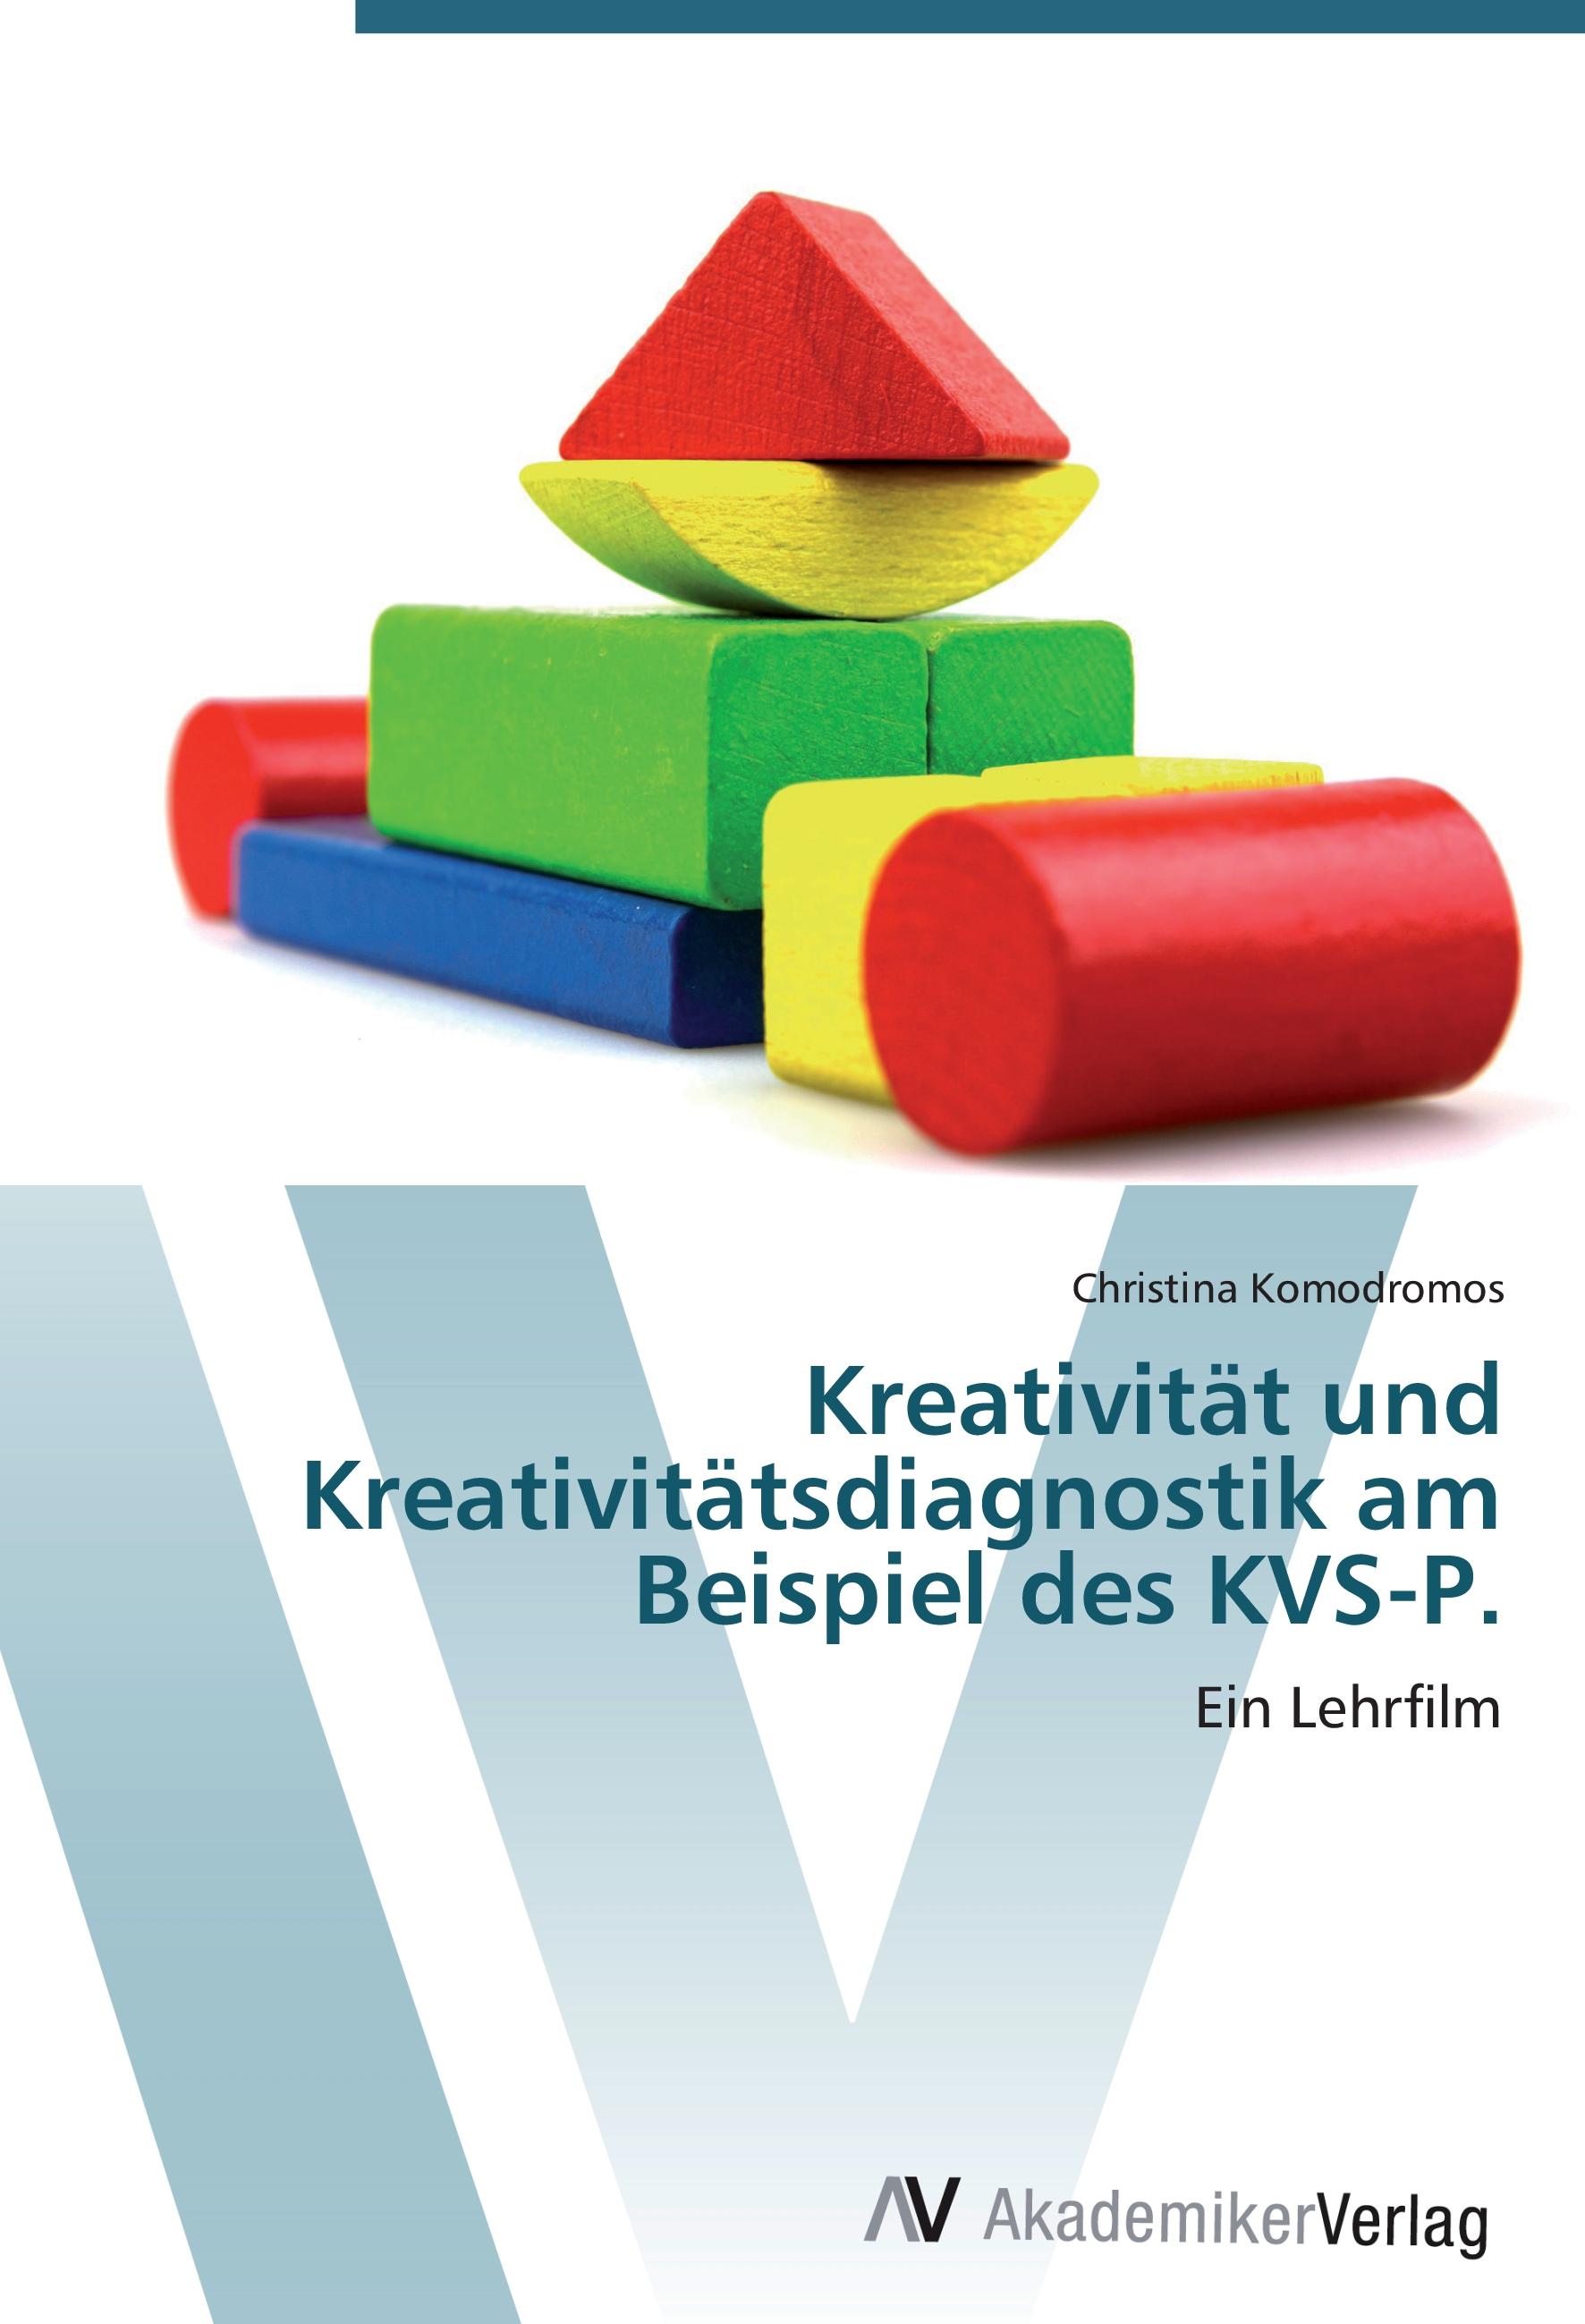 Kreativitaet und Kreativitaetsdiagnostik am Beispiel des KVS-P. - Christina Komodromos